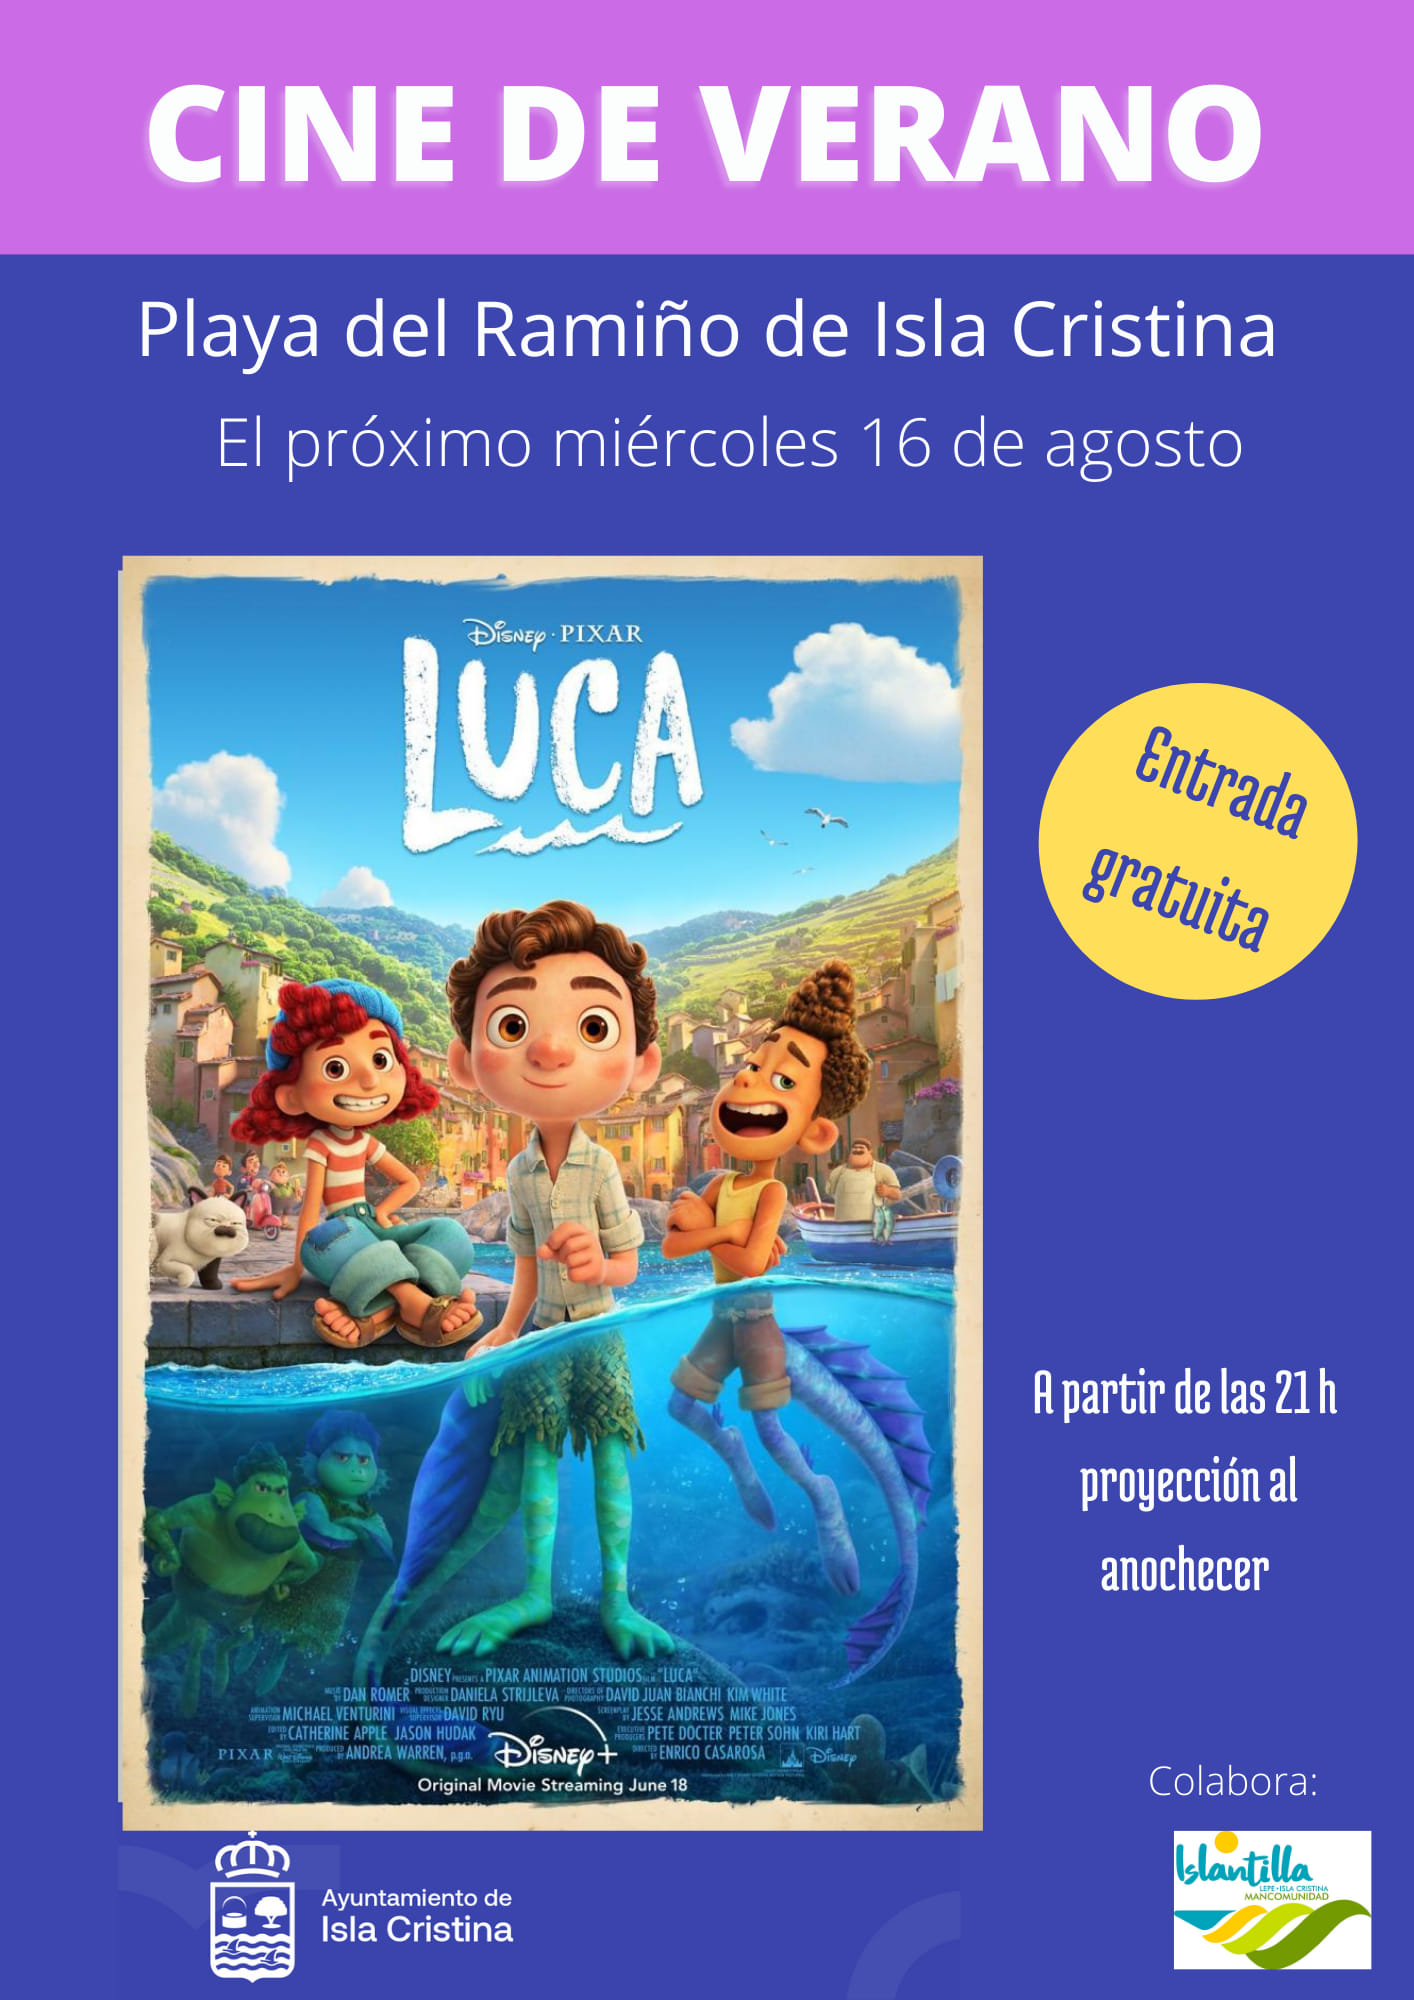 Cine de verano “Luca” película original de Disney. Playa Ramiño de Isla Cristina